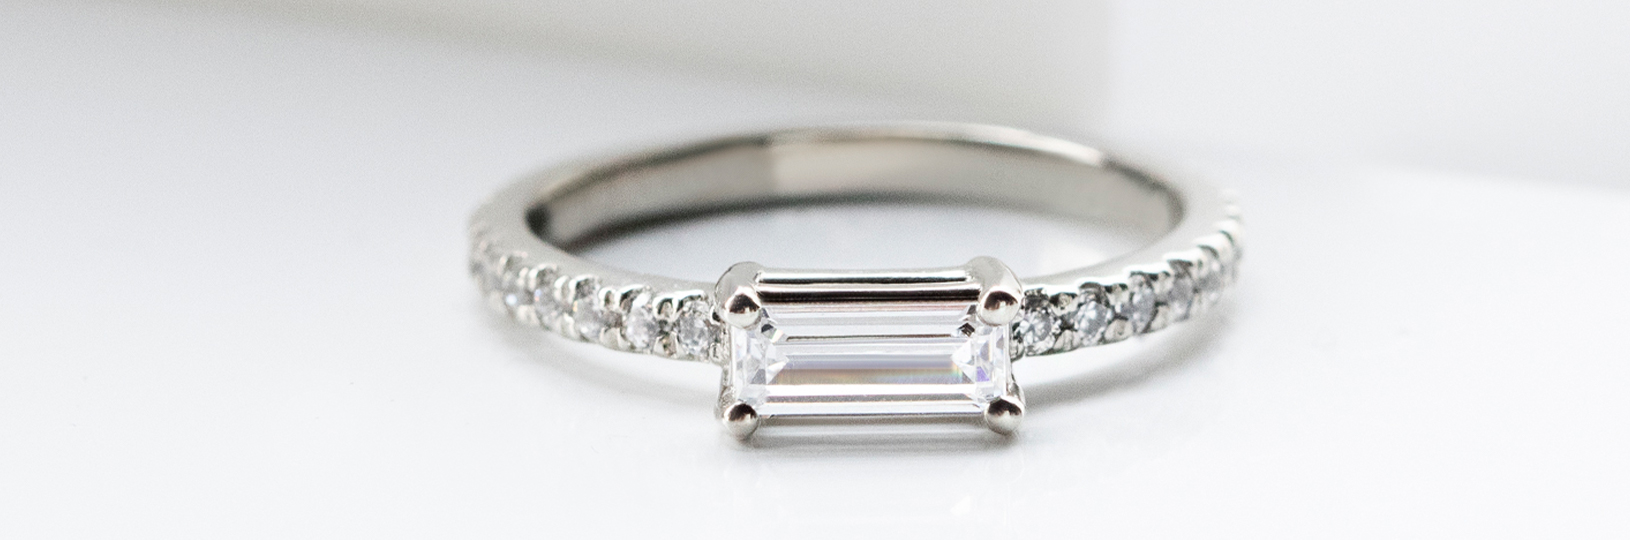 Simulated diamond promise ring.